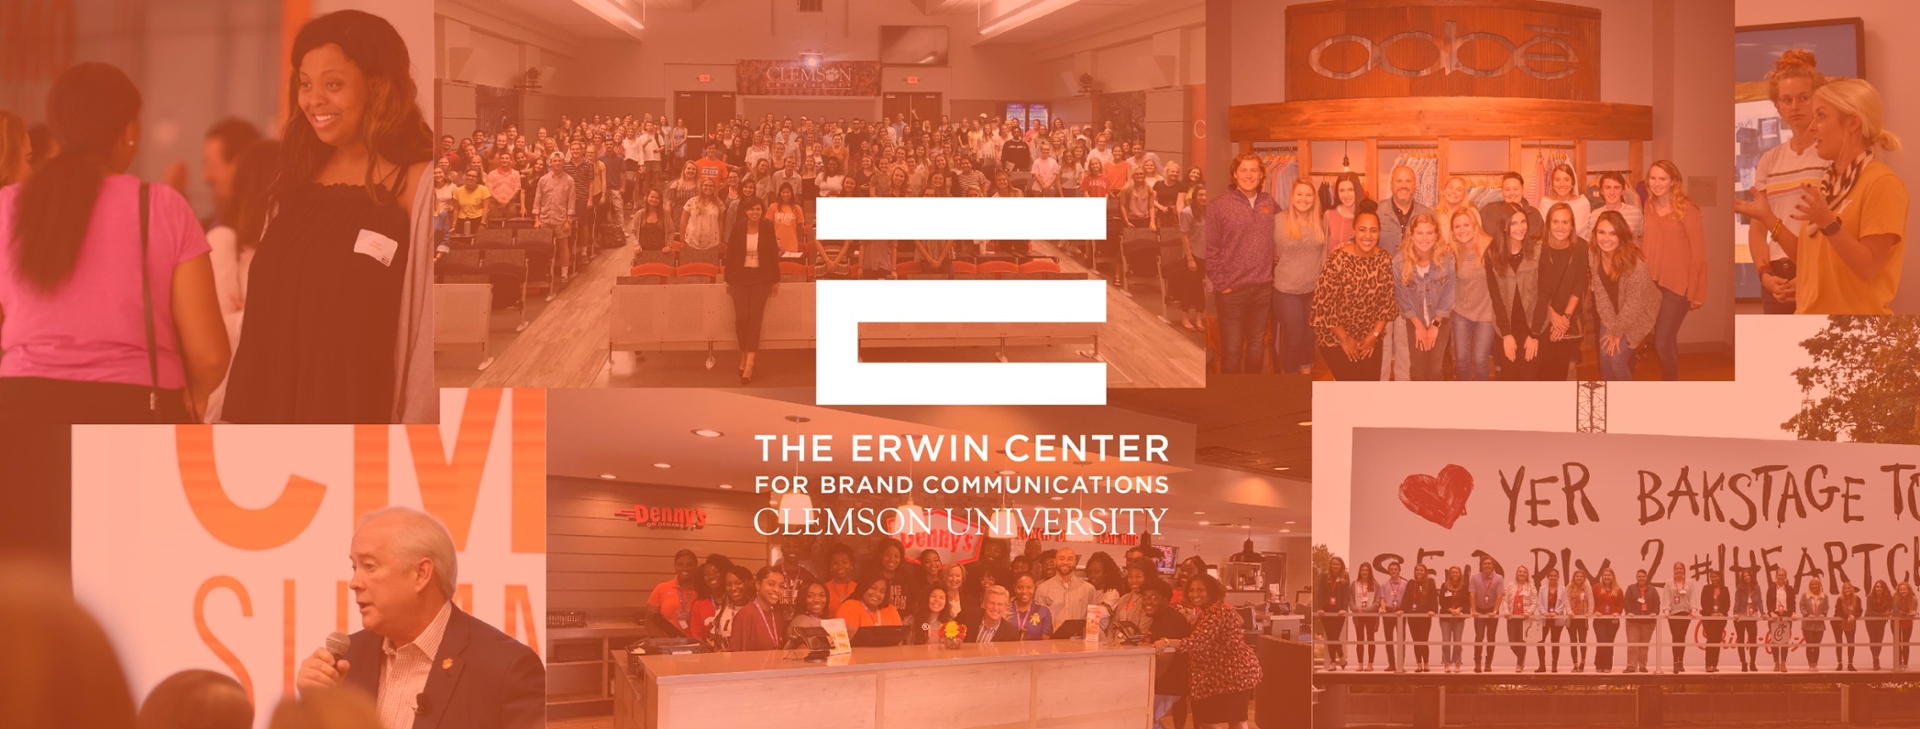 Erwin Center for Brand Communications